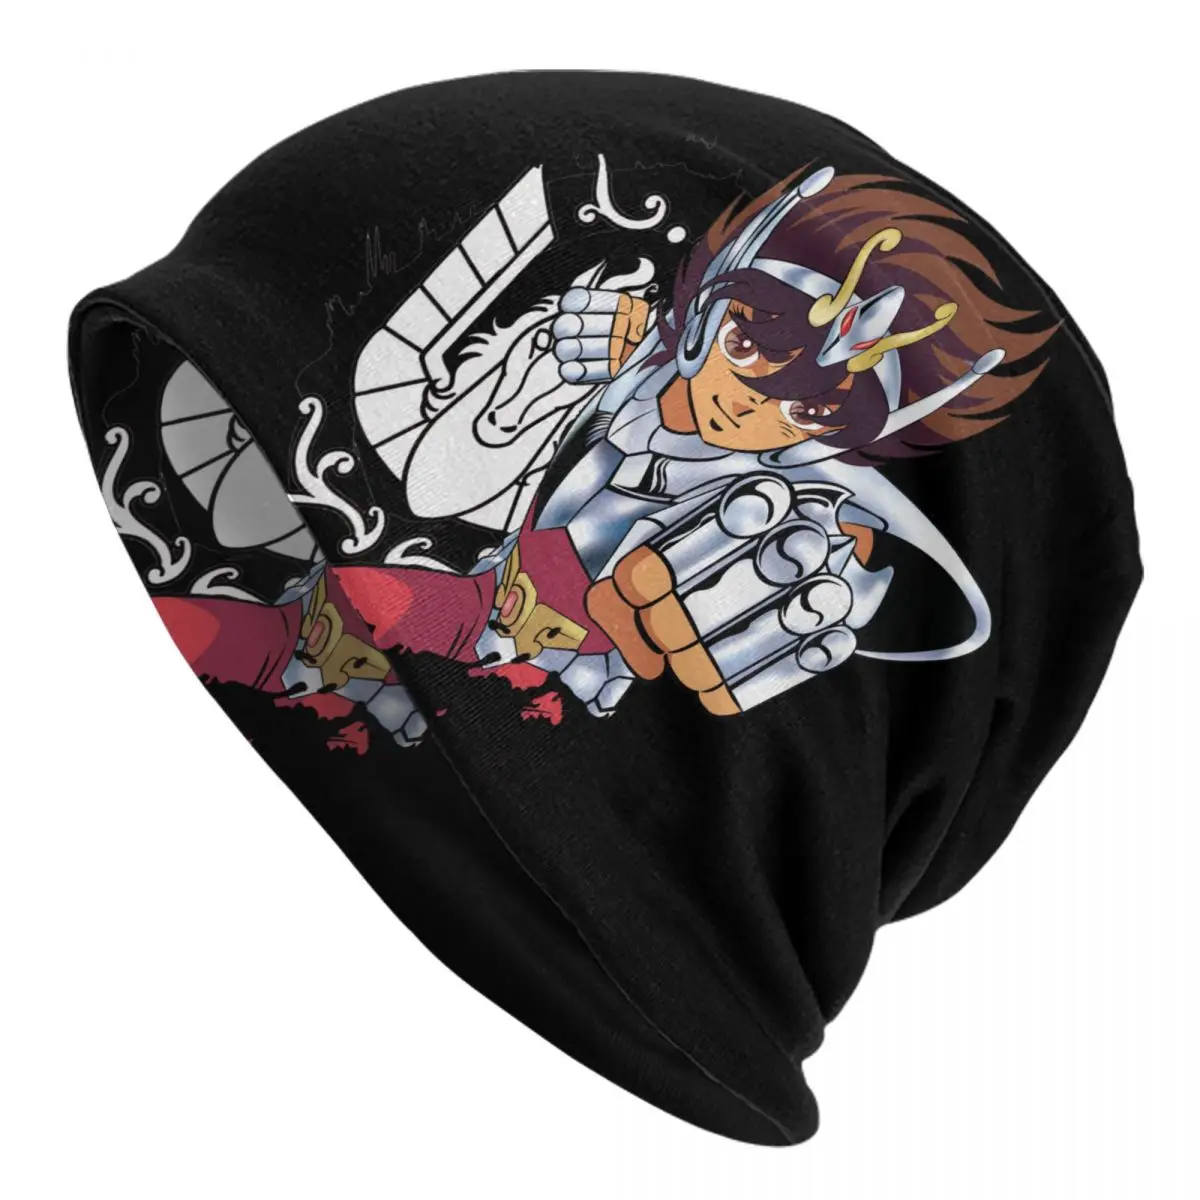 

Saint Seiya Pegasus Skullies Beanies Caps Fashion Winter Warm Women Men Knit Hat Unisex Adult Knights Of The Zodiac Bonnet Hats